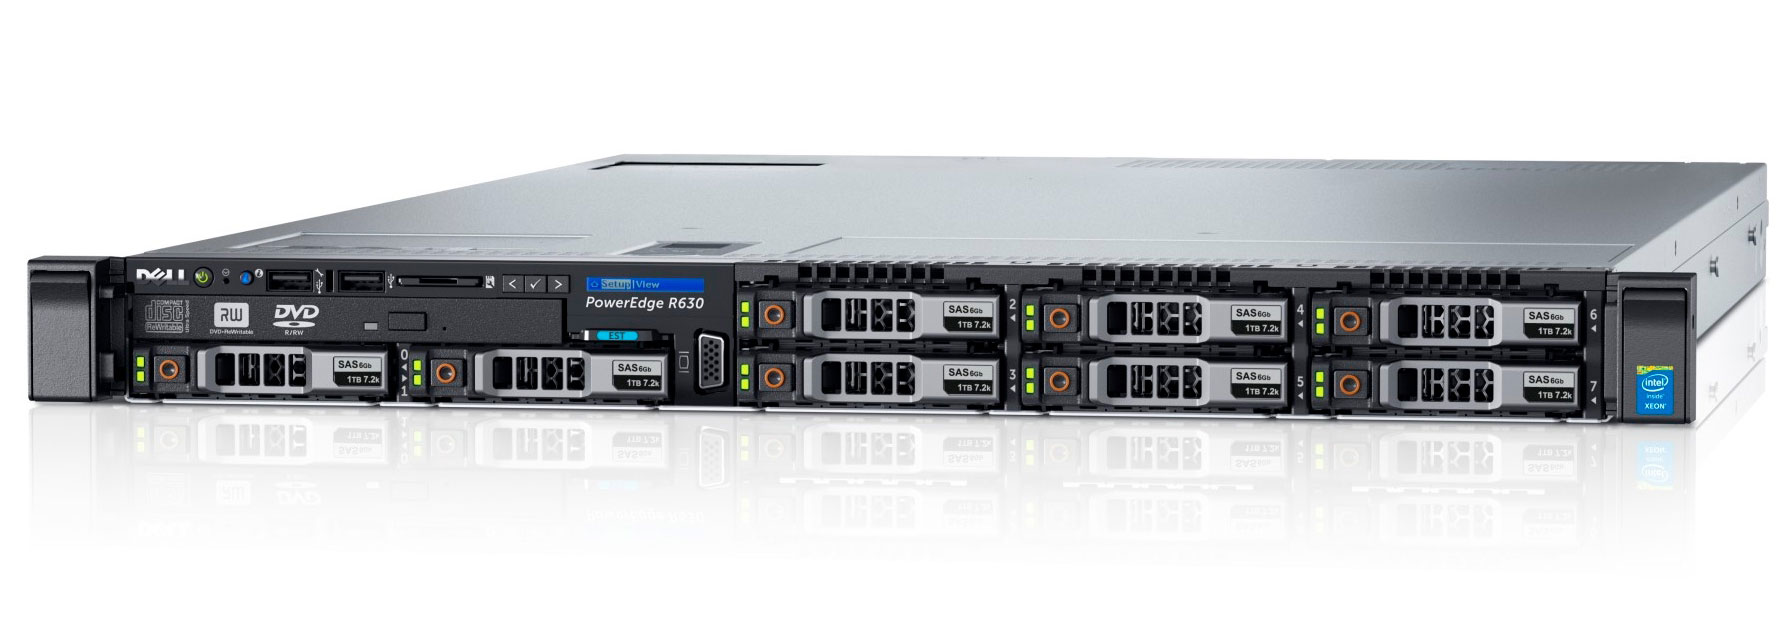 Подробное фото Сервер DELL PowerEdge R630 2x Xeon E5-2683v4 192Gb 2133P DDR4 8x noHDD 2.5", SAS RAID Perc H730, 1024Mb, DVD, 2*PSU